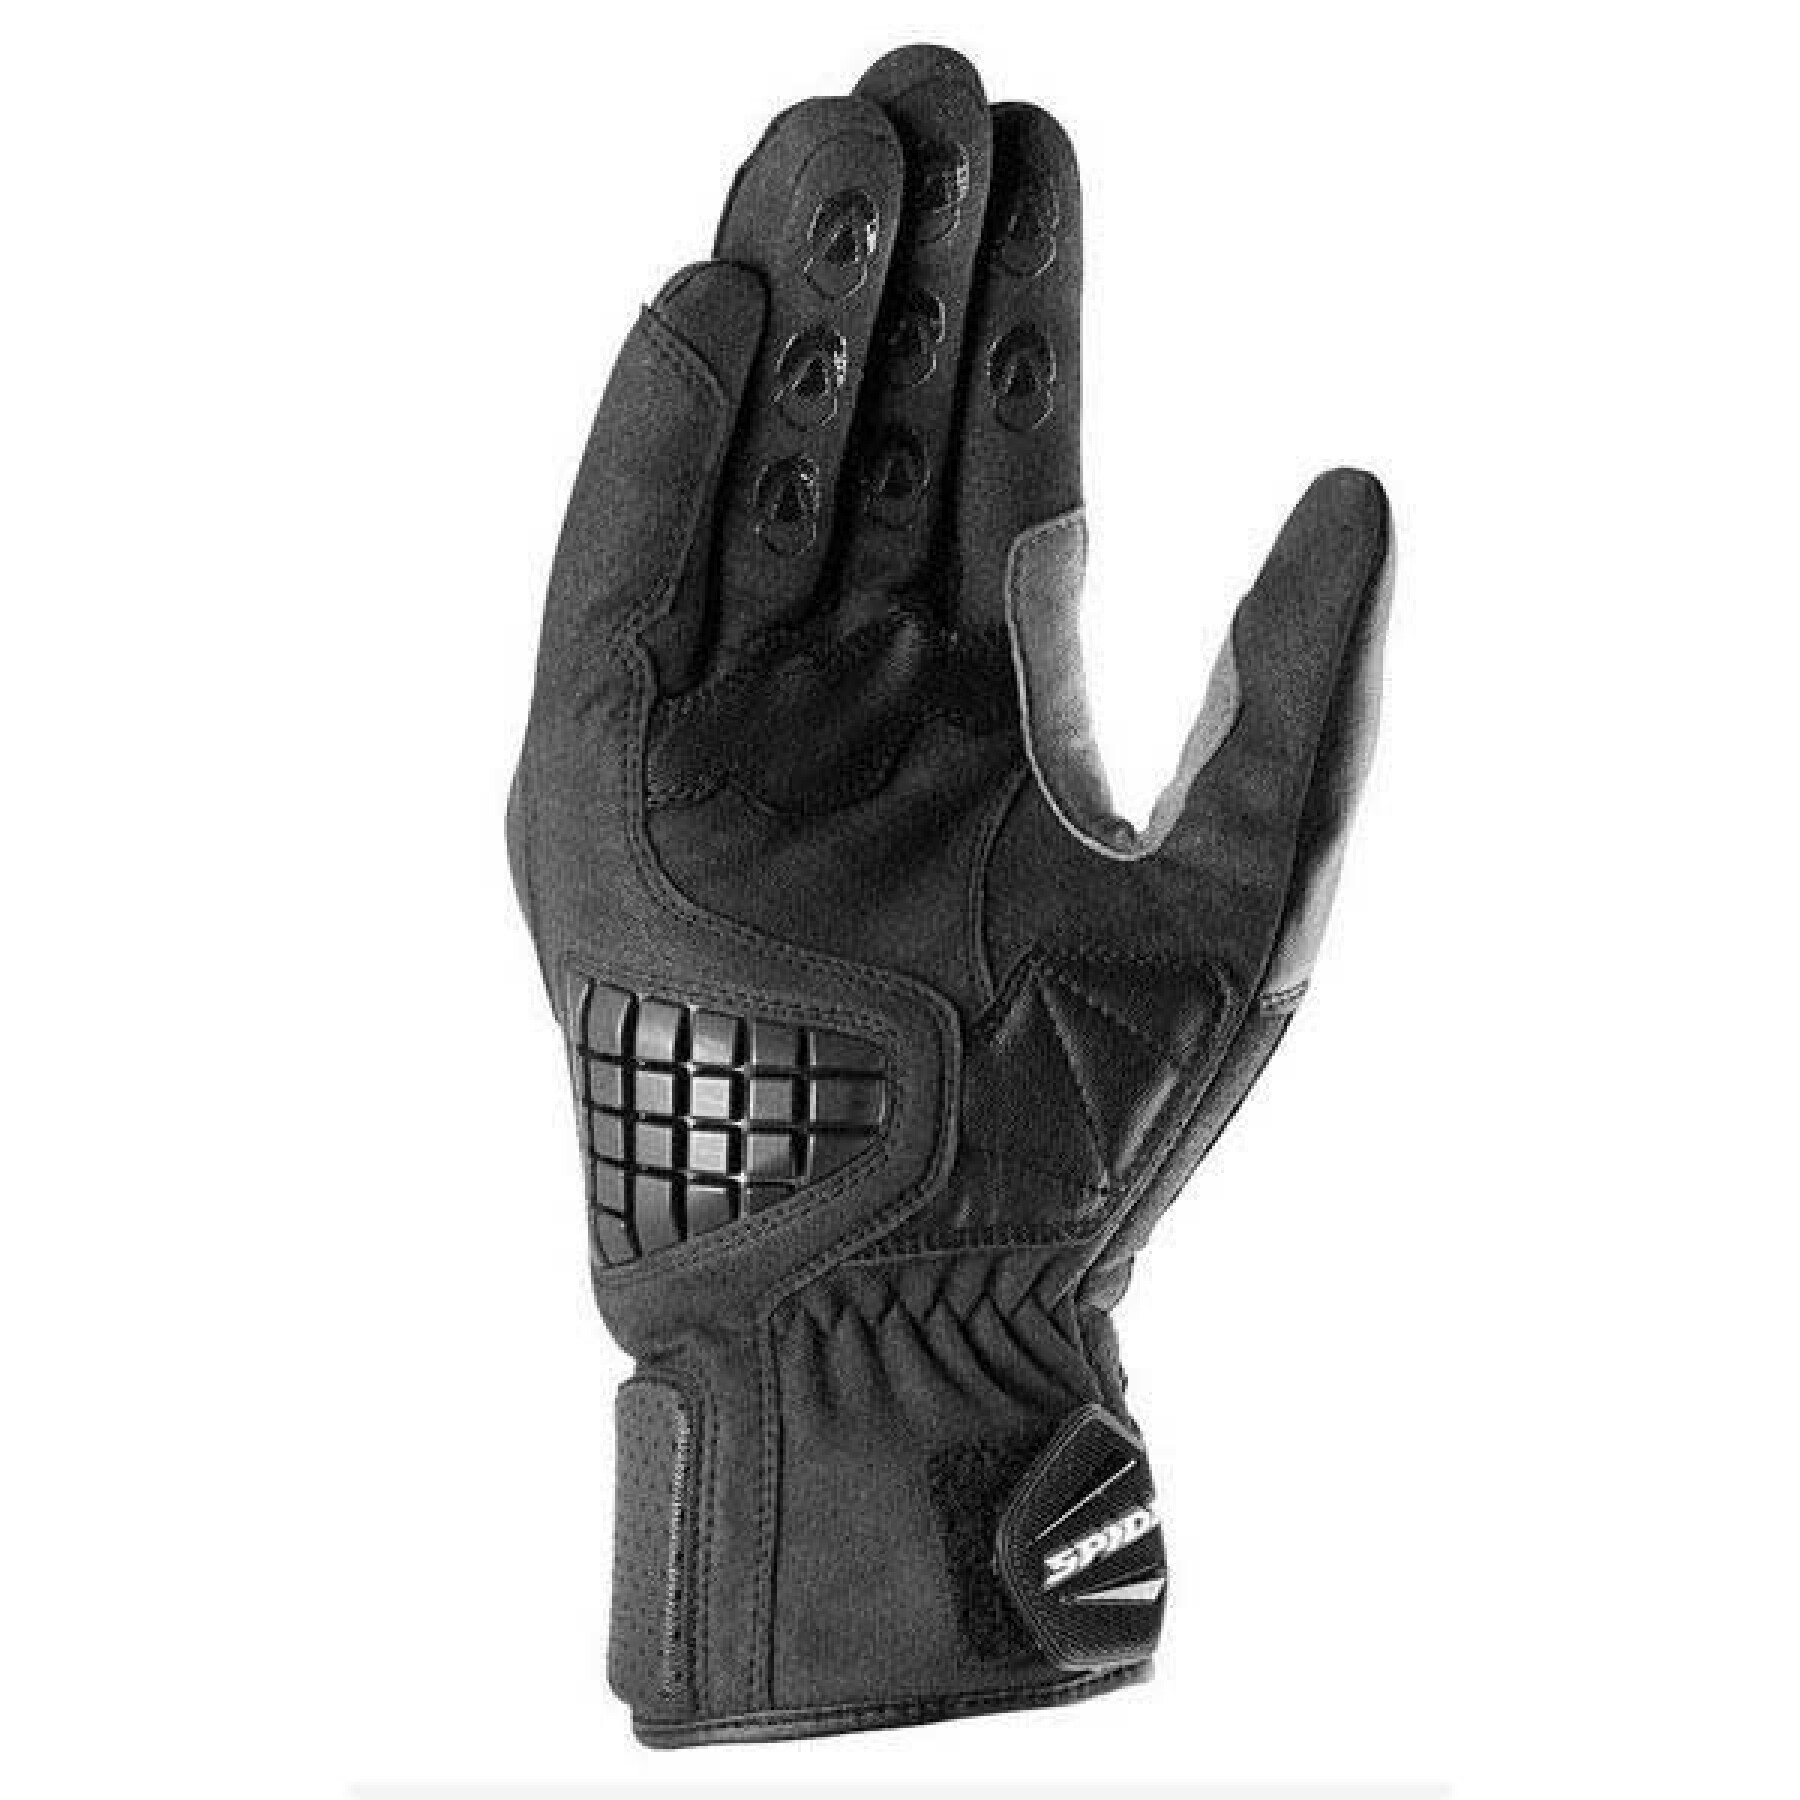 All season motorcycle gloves Spidi TX-1